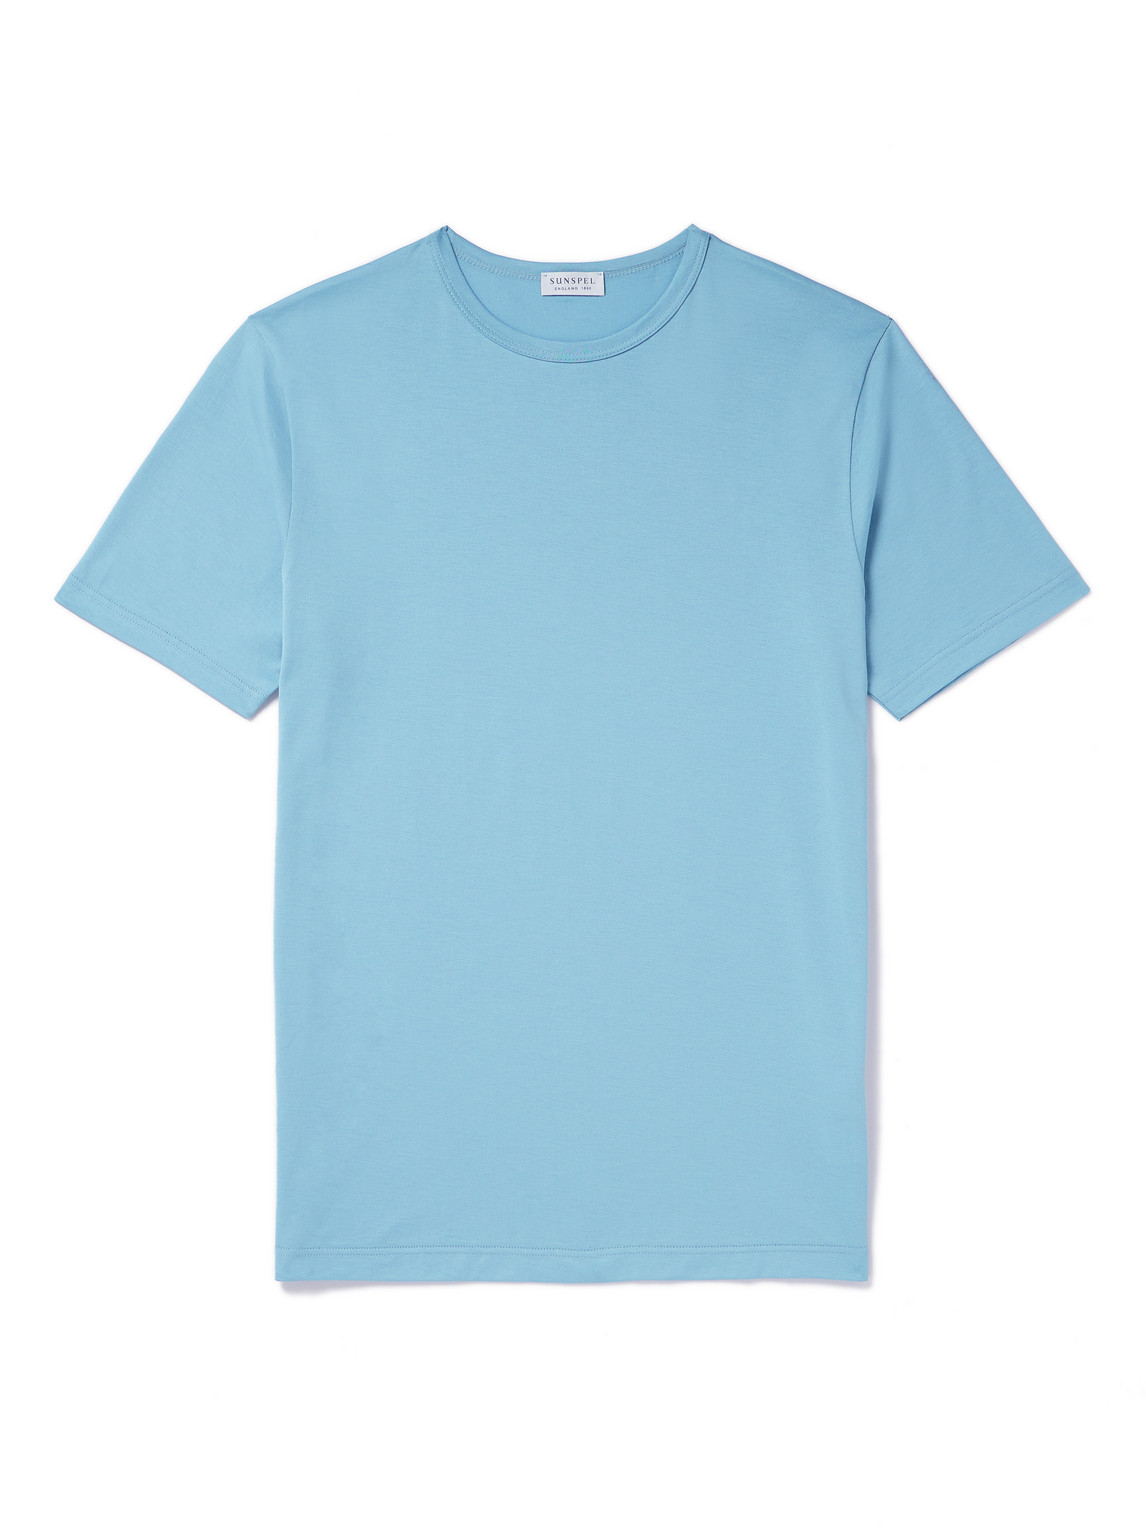 Sunspel - Slim-Fit Cotton-Jersey T-Shirt - Men - Blue - XXL von Sunspel